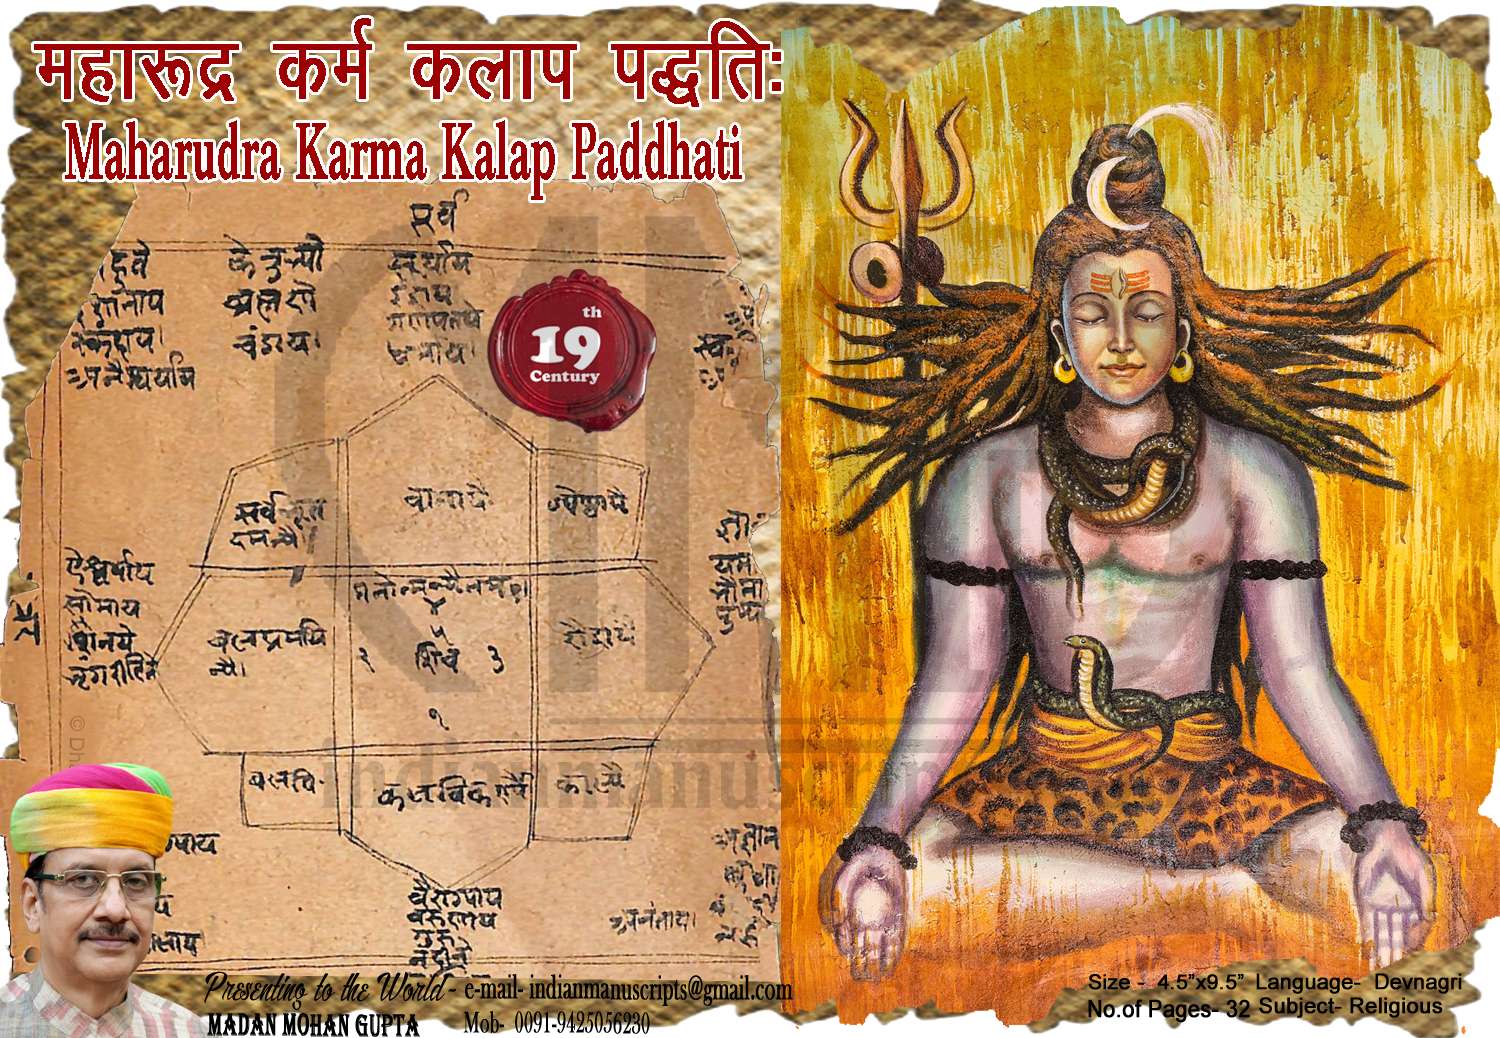 Maharudra Karma Kalap Paddhati